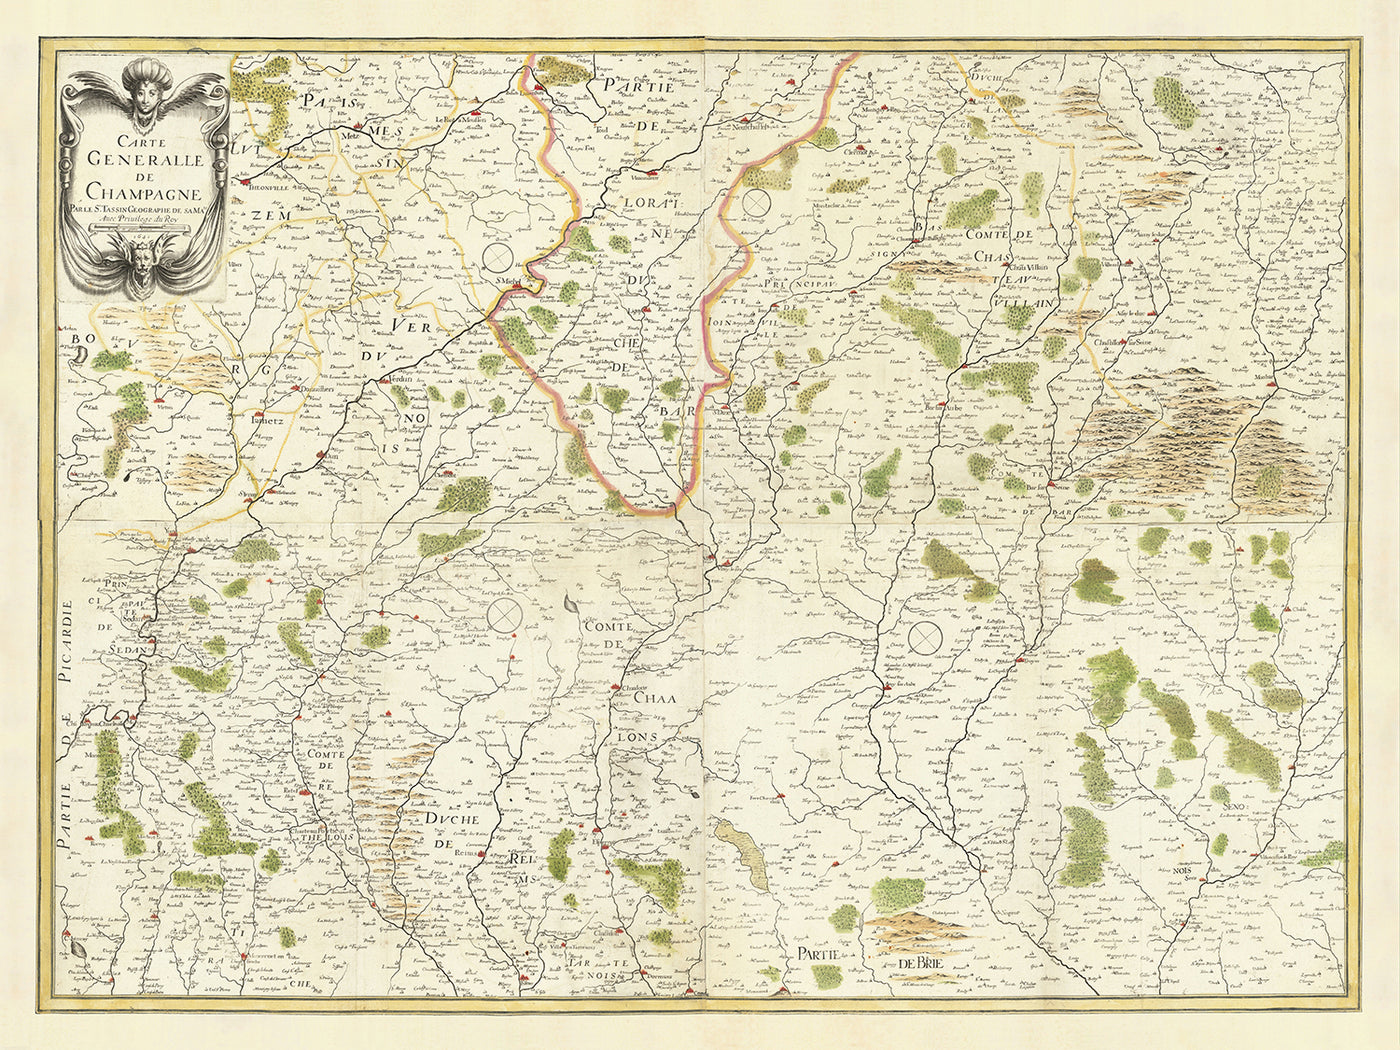 Mapa antiguo de la región de Champaña, Francia por Christopher Tassin, 1641: Reims, Épernay, Troyes, Châlons-en-Champagne, Vitry-le-François